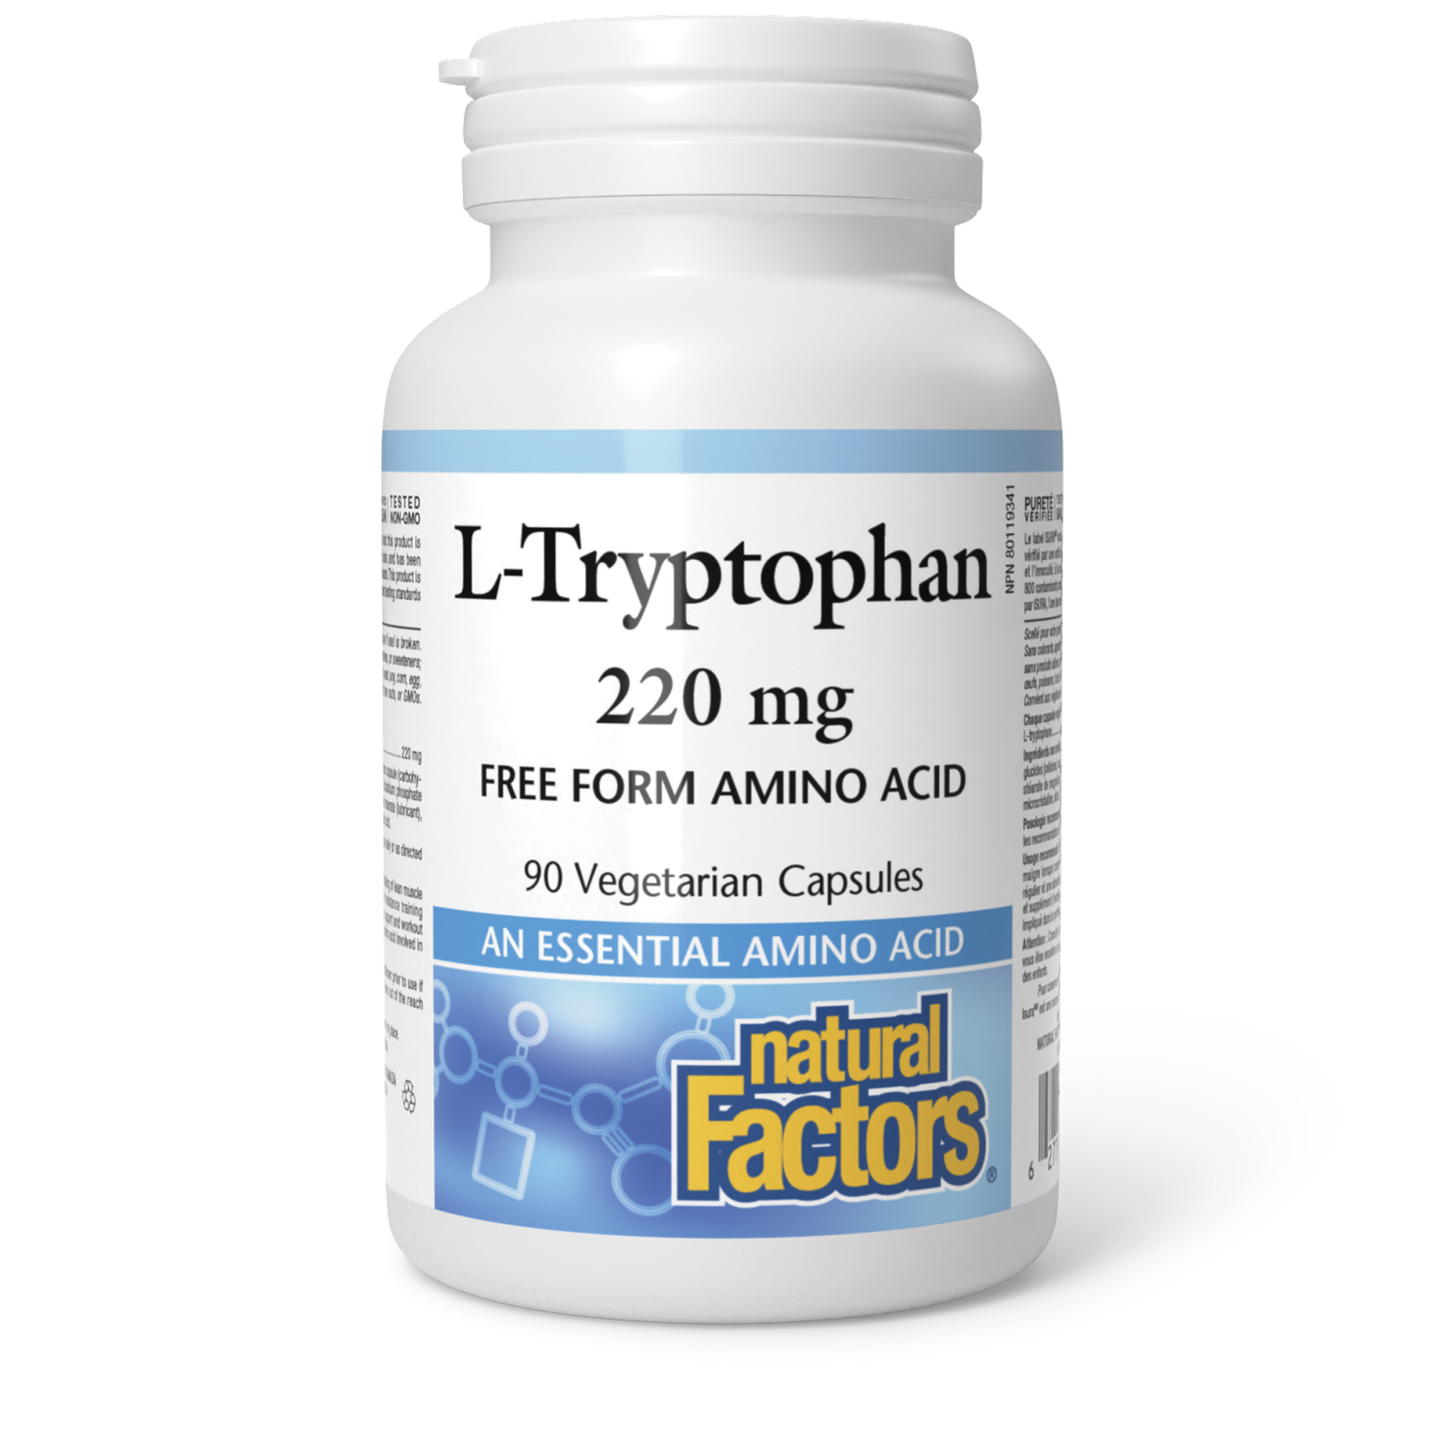 L-Tryptophan 220 mg, Natural Factors|v|image|2863